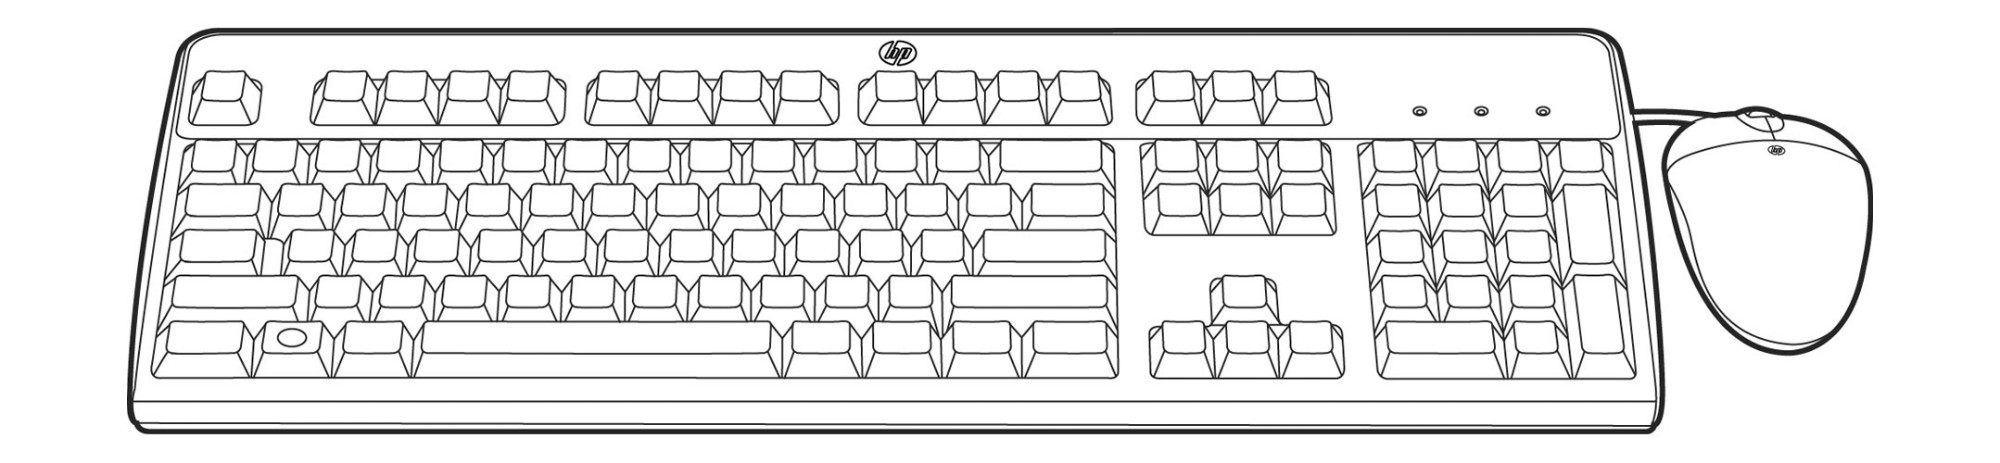 Hewlett Packard Enterprise 672097-113 keyboard Mouse included USB QWERTZ Black